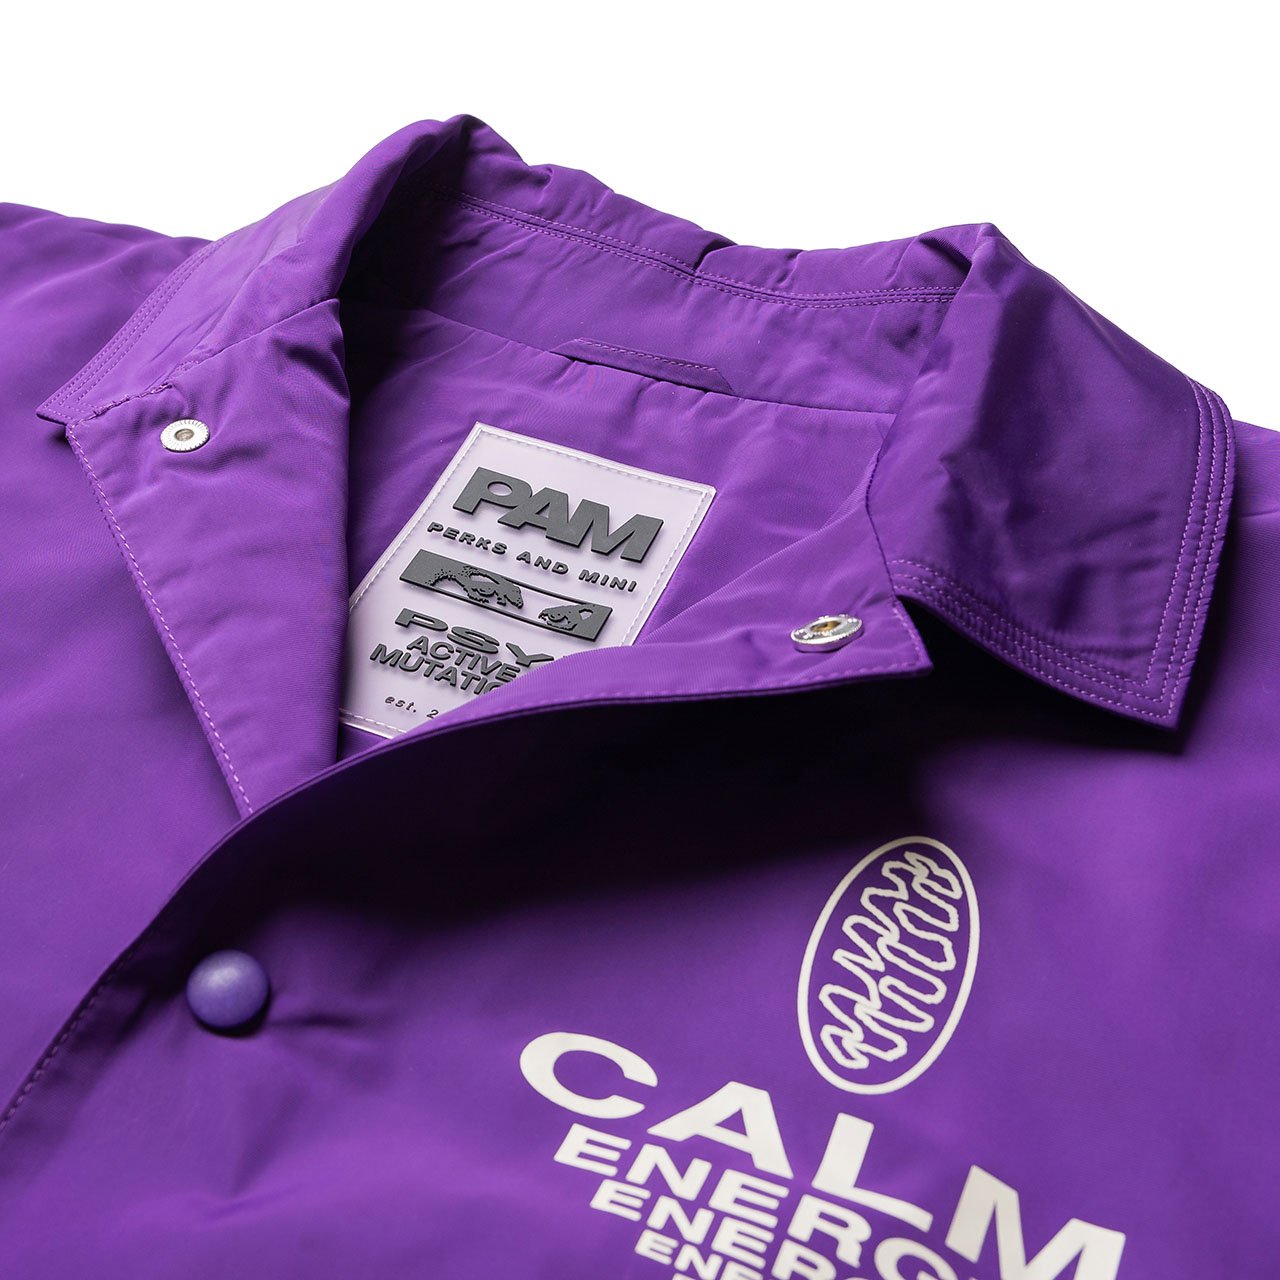 perks and mini waveform calm coach jacket (purple) - 39080-c-mprp - a.plus - Image - 3